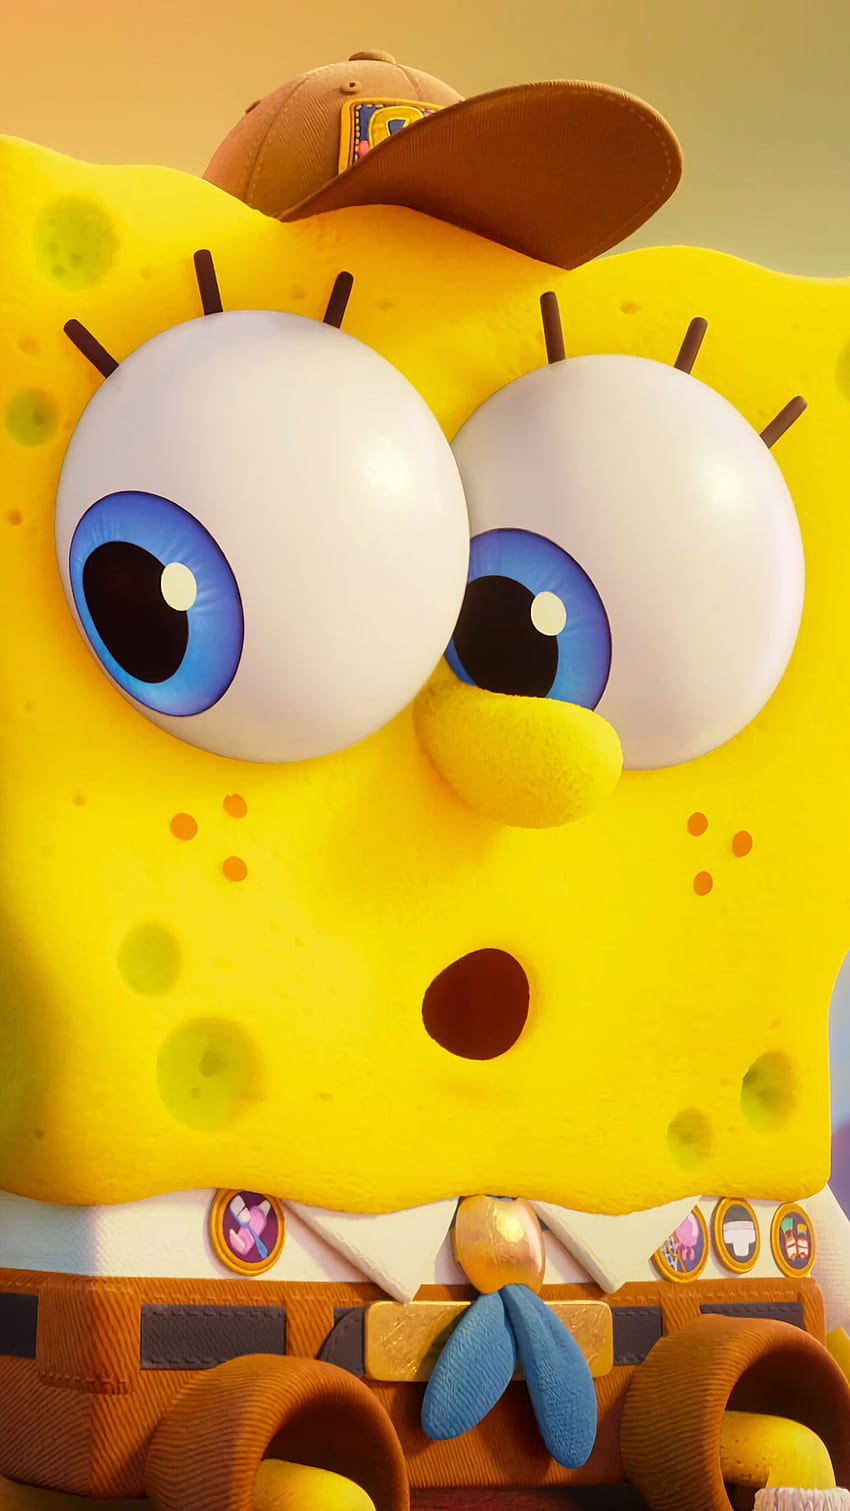 80 Spongebob Squarepants HD Wallpapers and Backgrounds